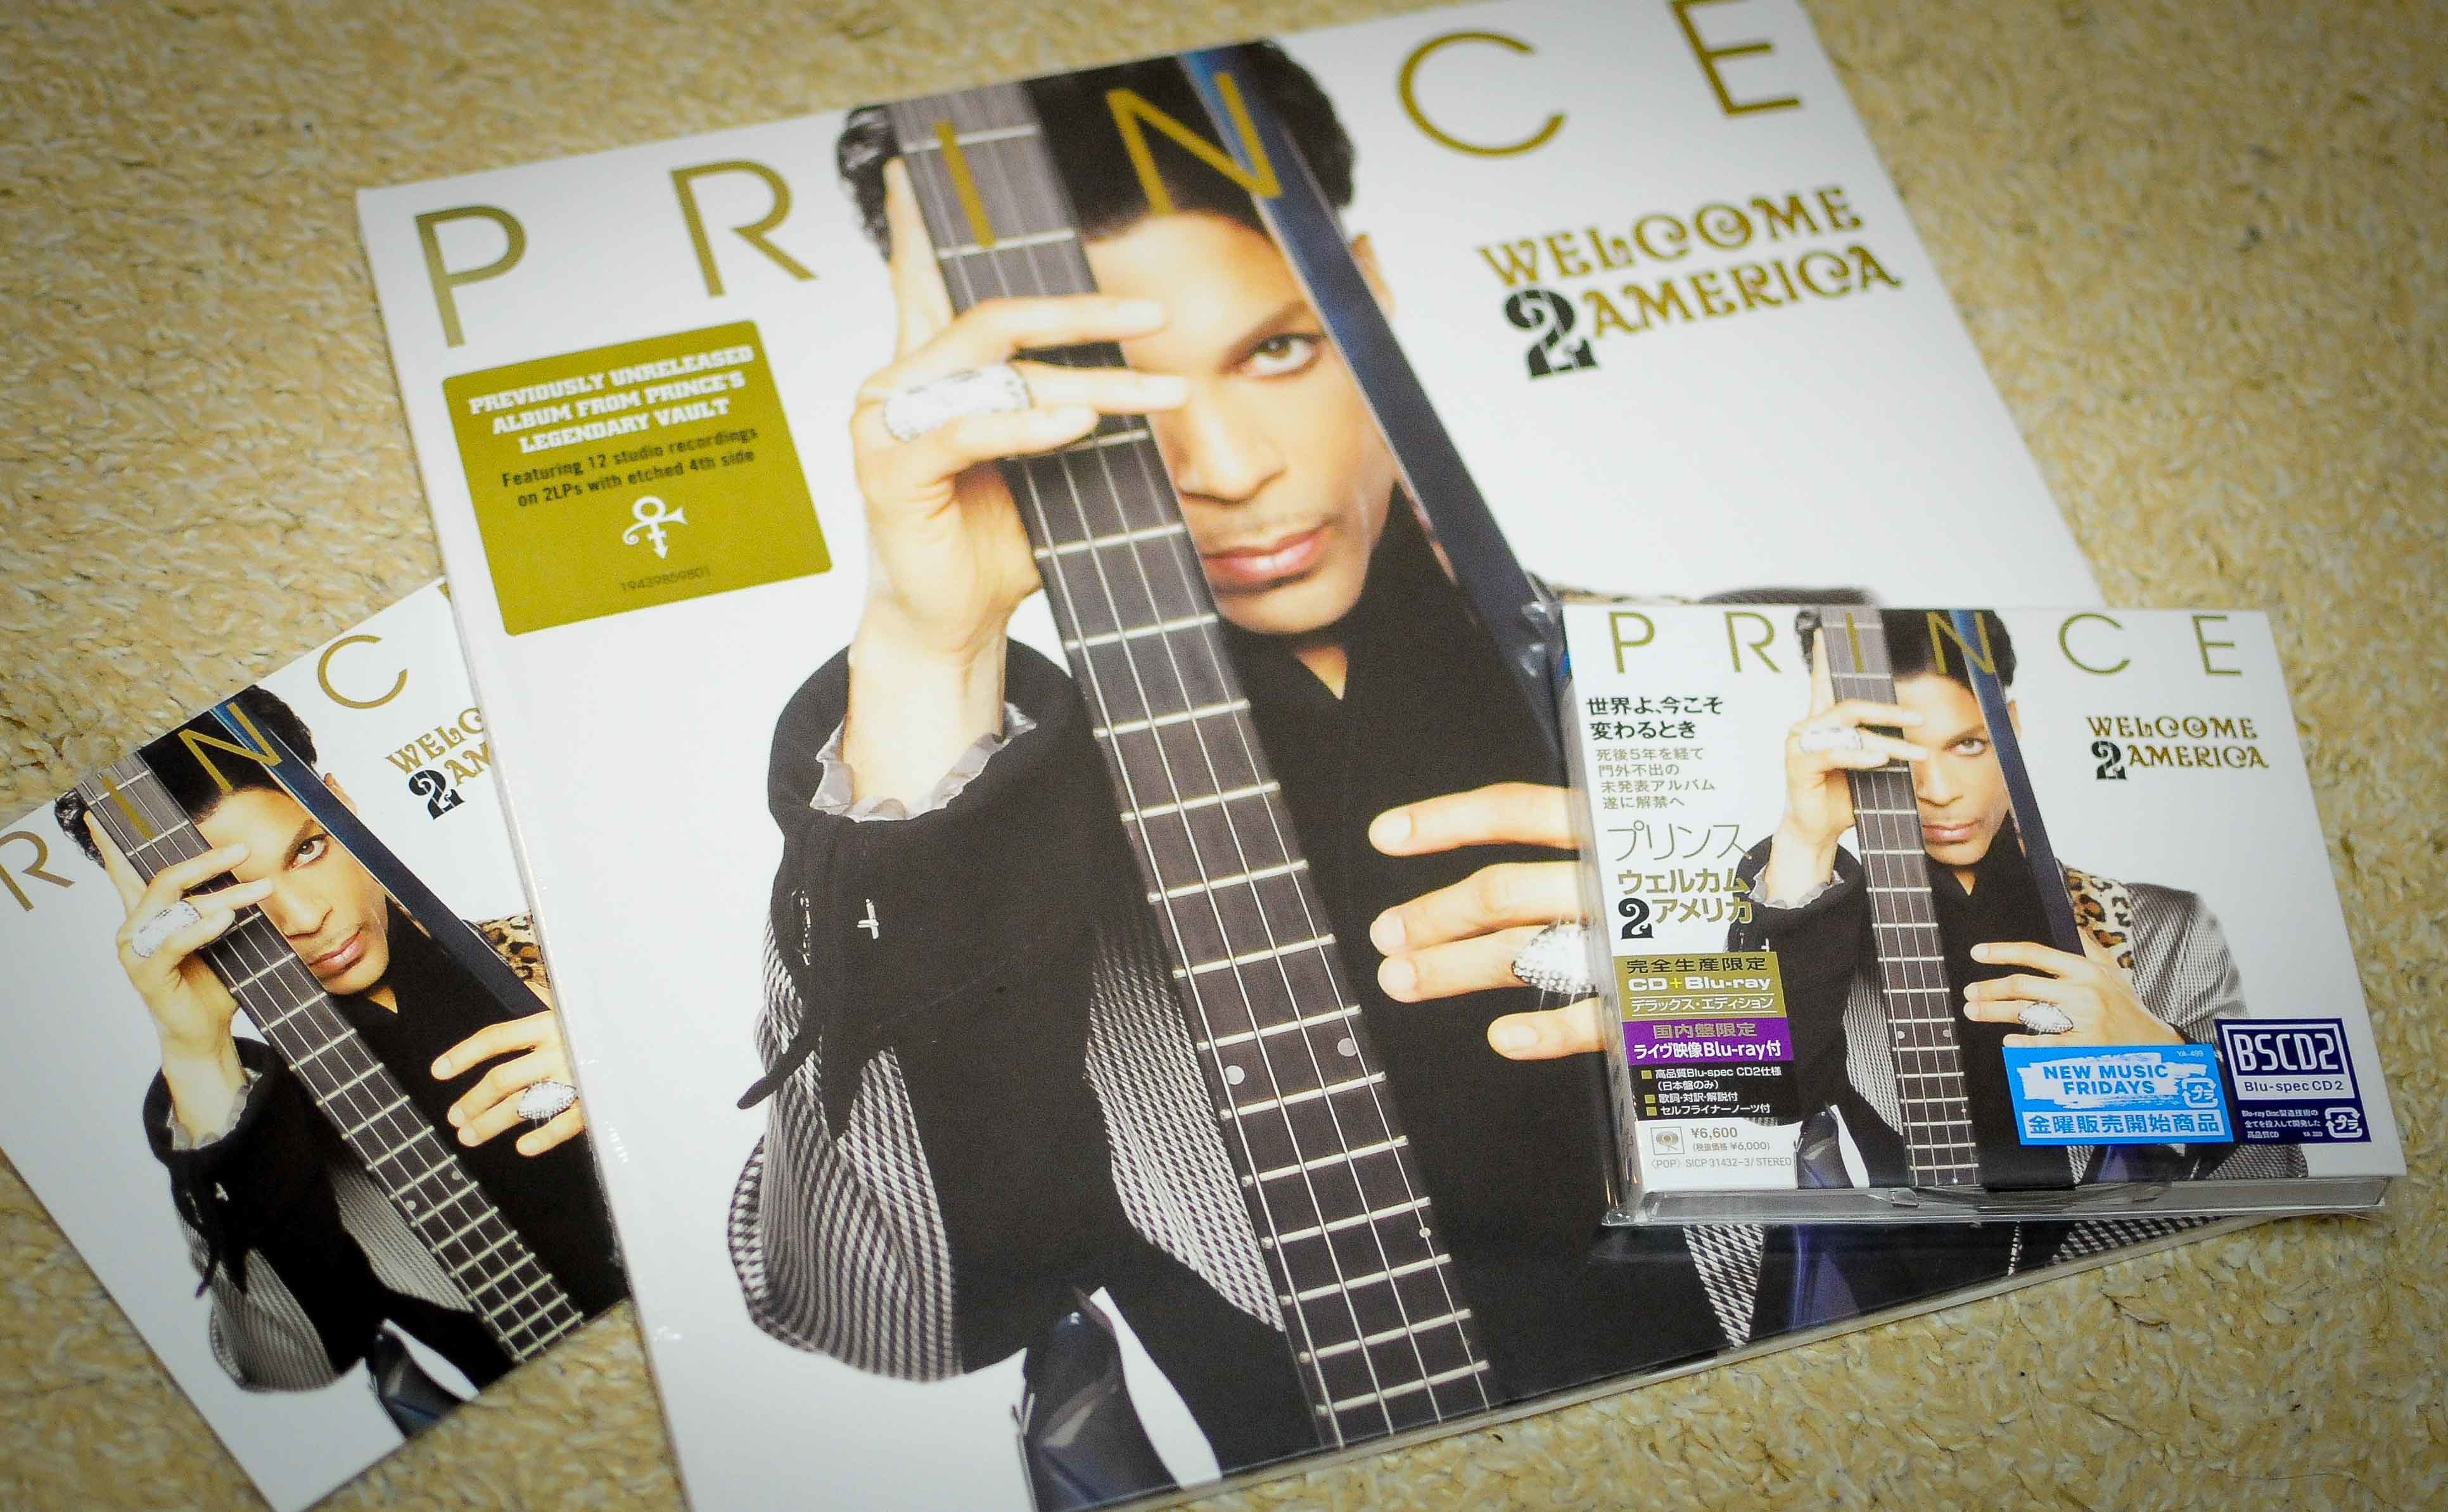 Prince - Welcome 2 America - Prince